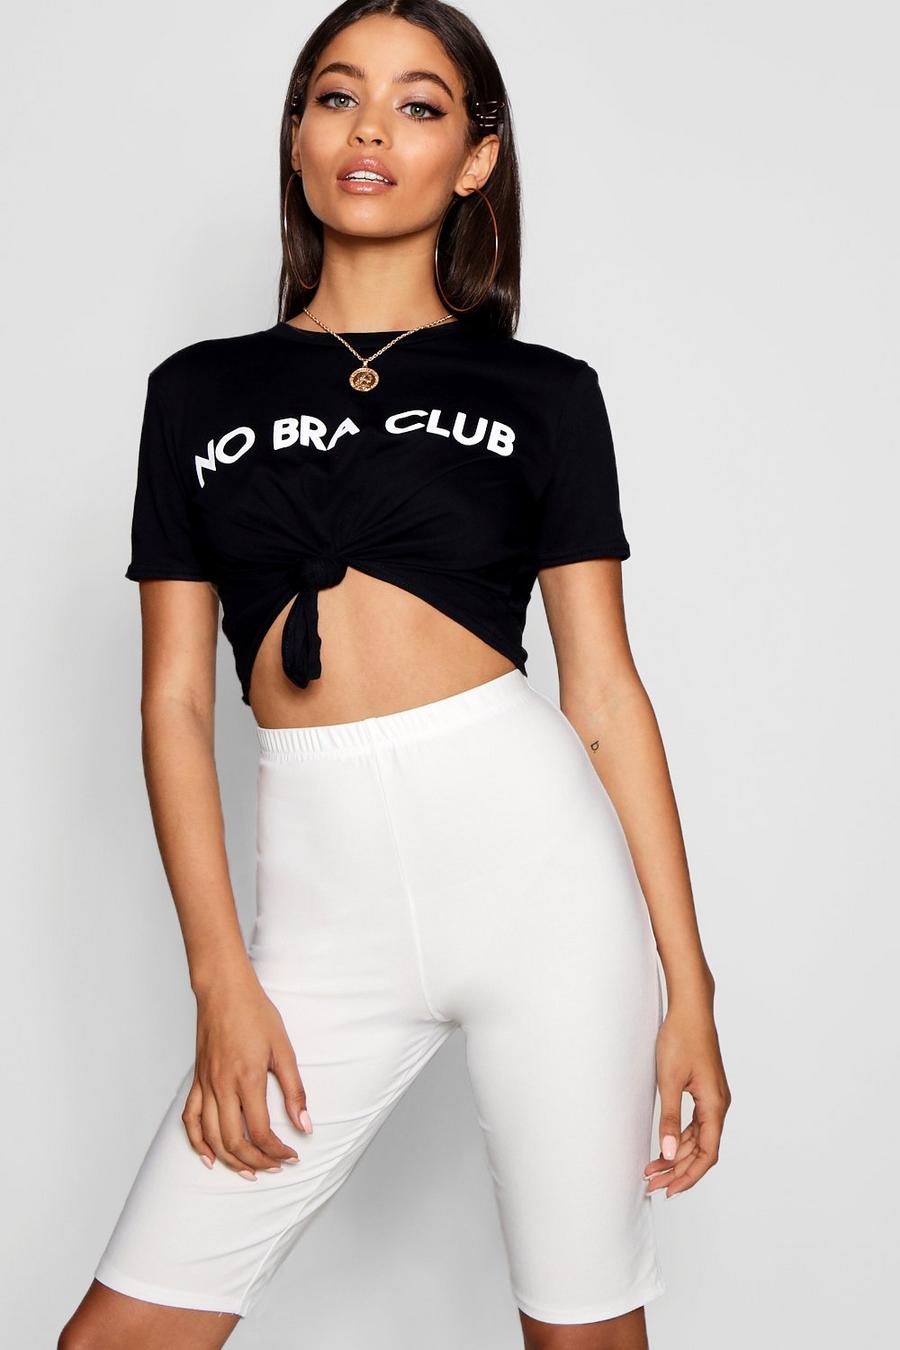  No Bra Club T-Shirt : Clothing, Shoes & Jewelry